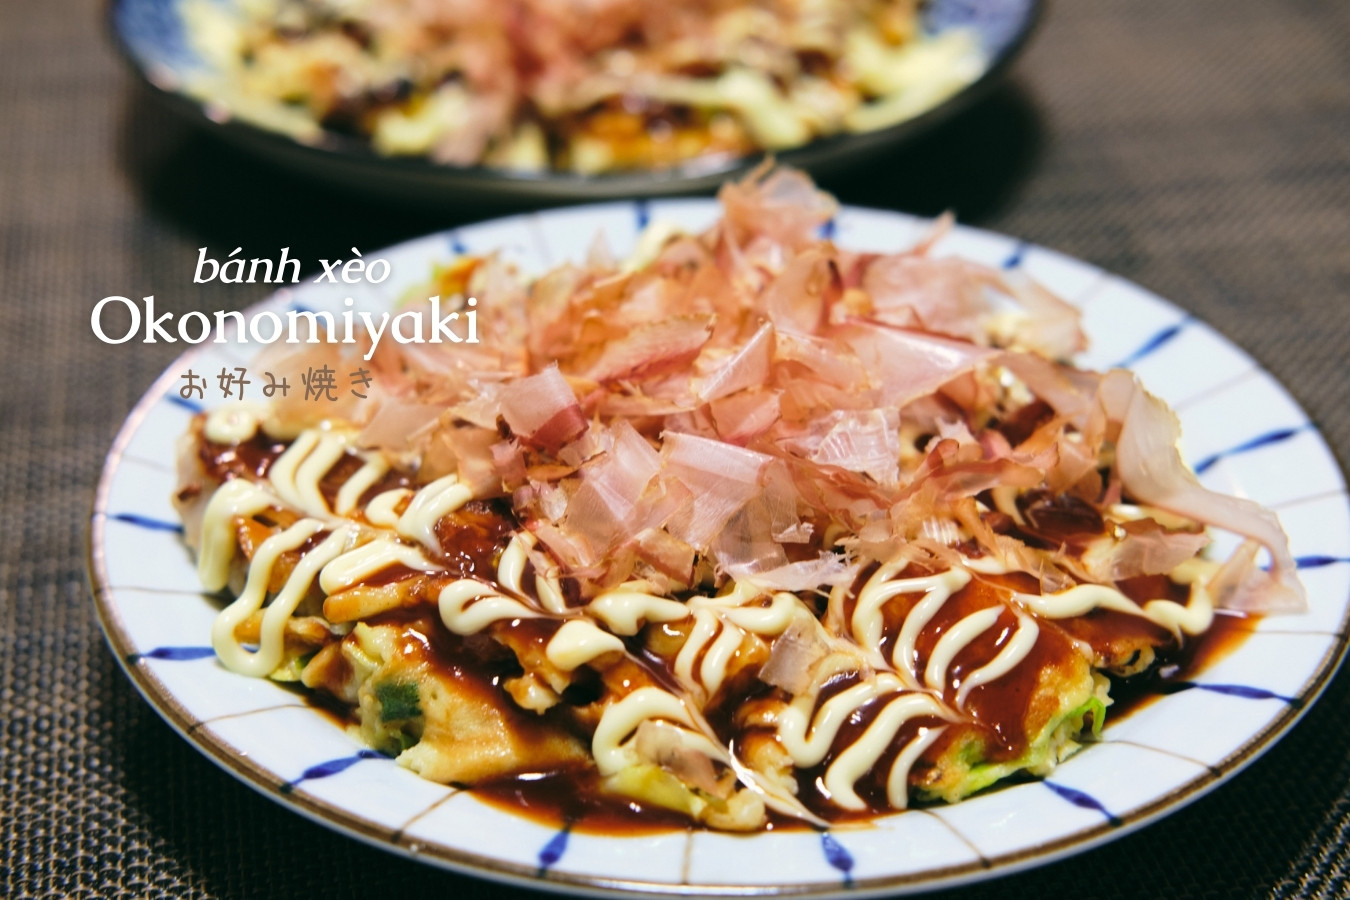 cach lam okonomiyaki